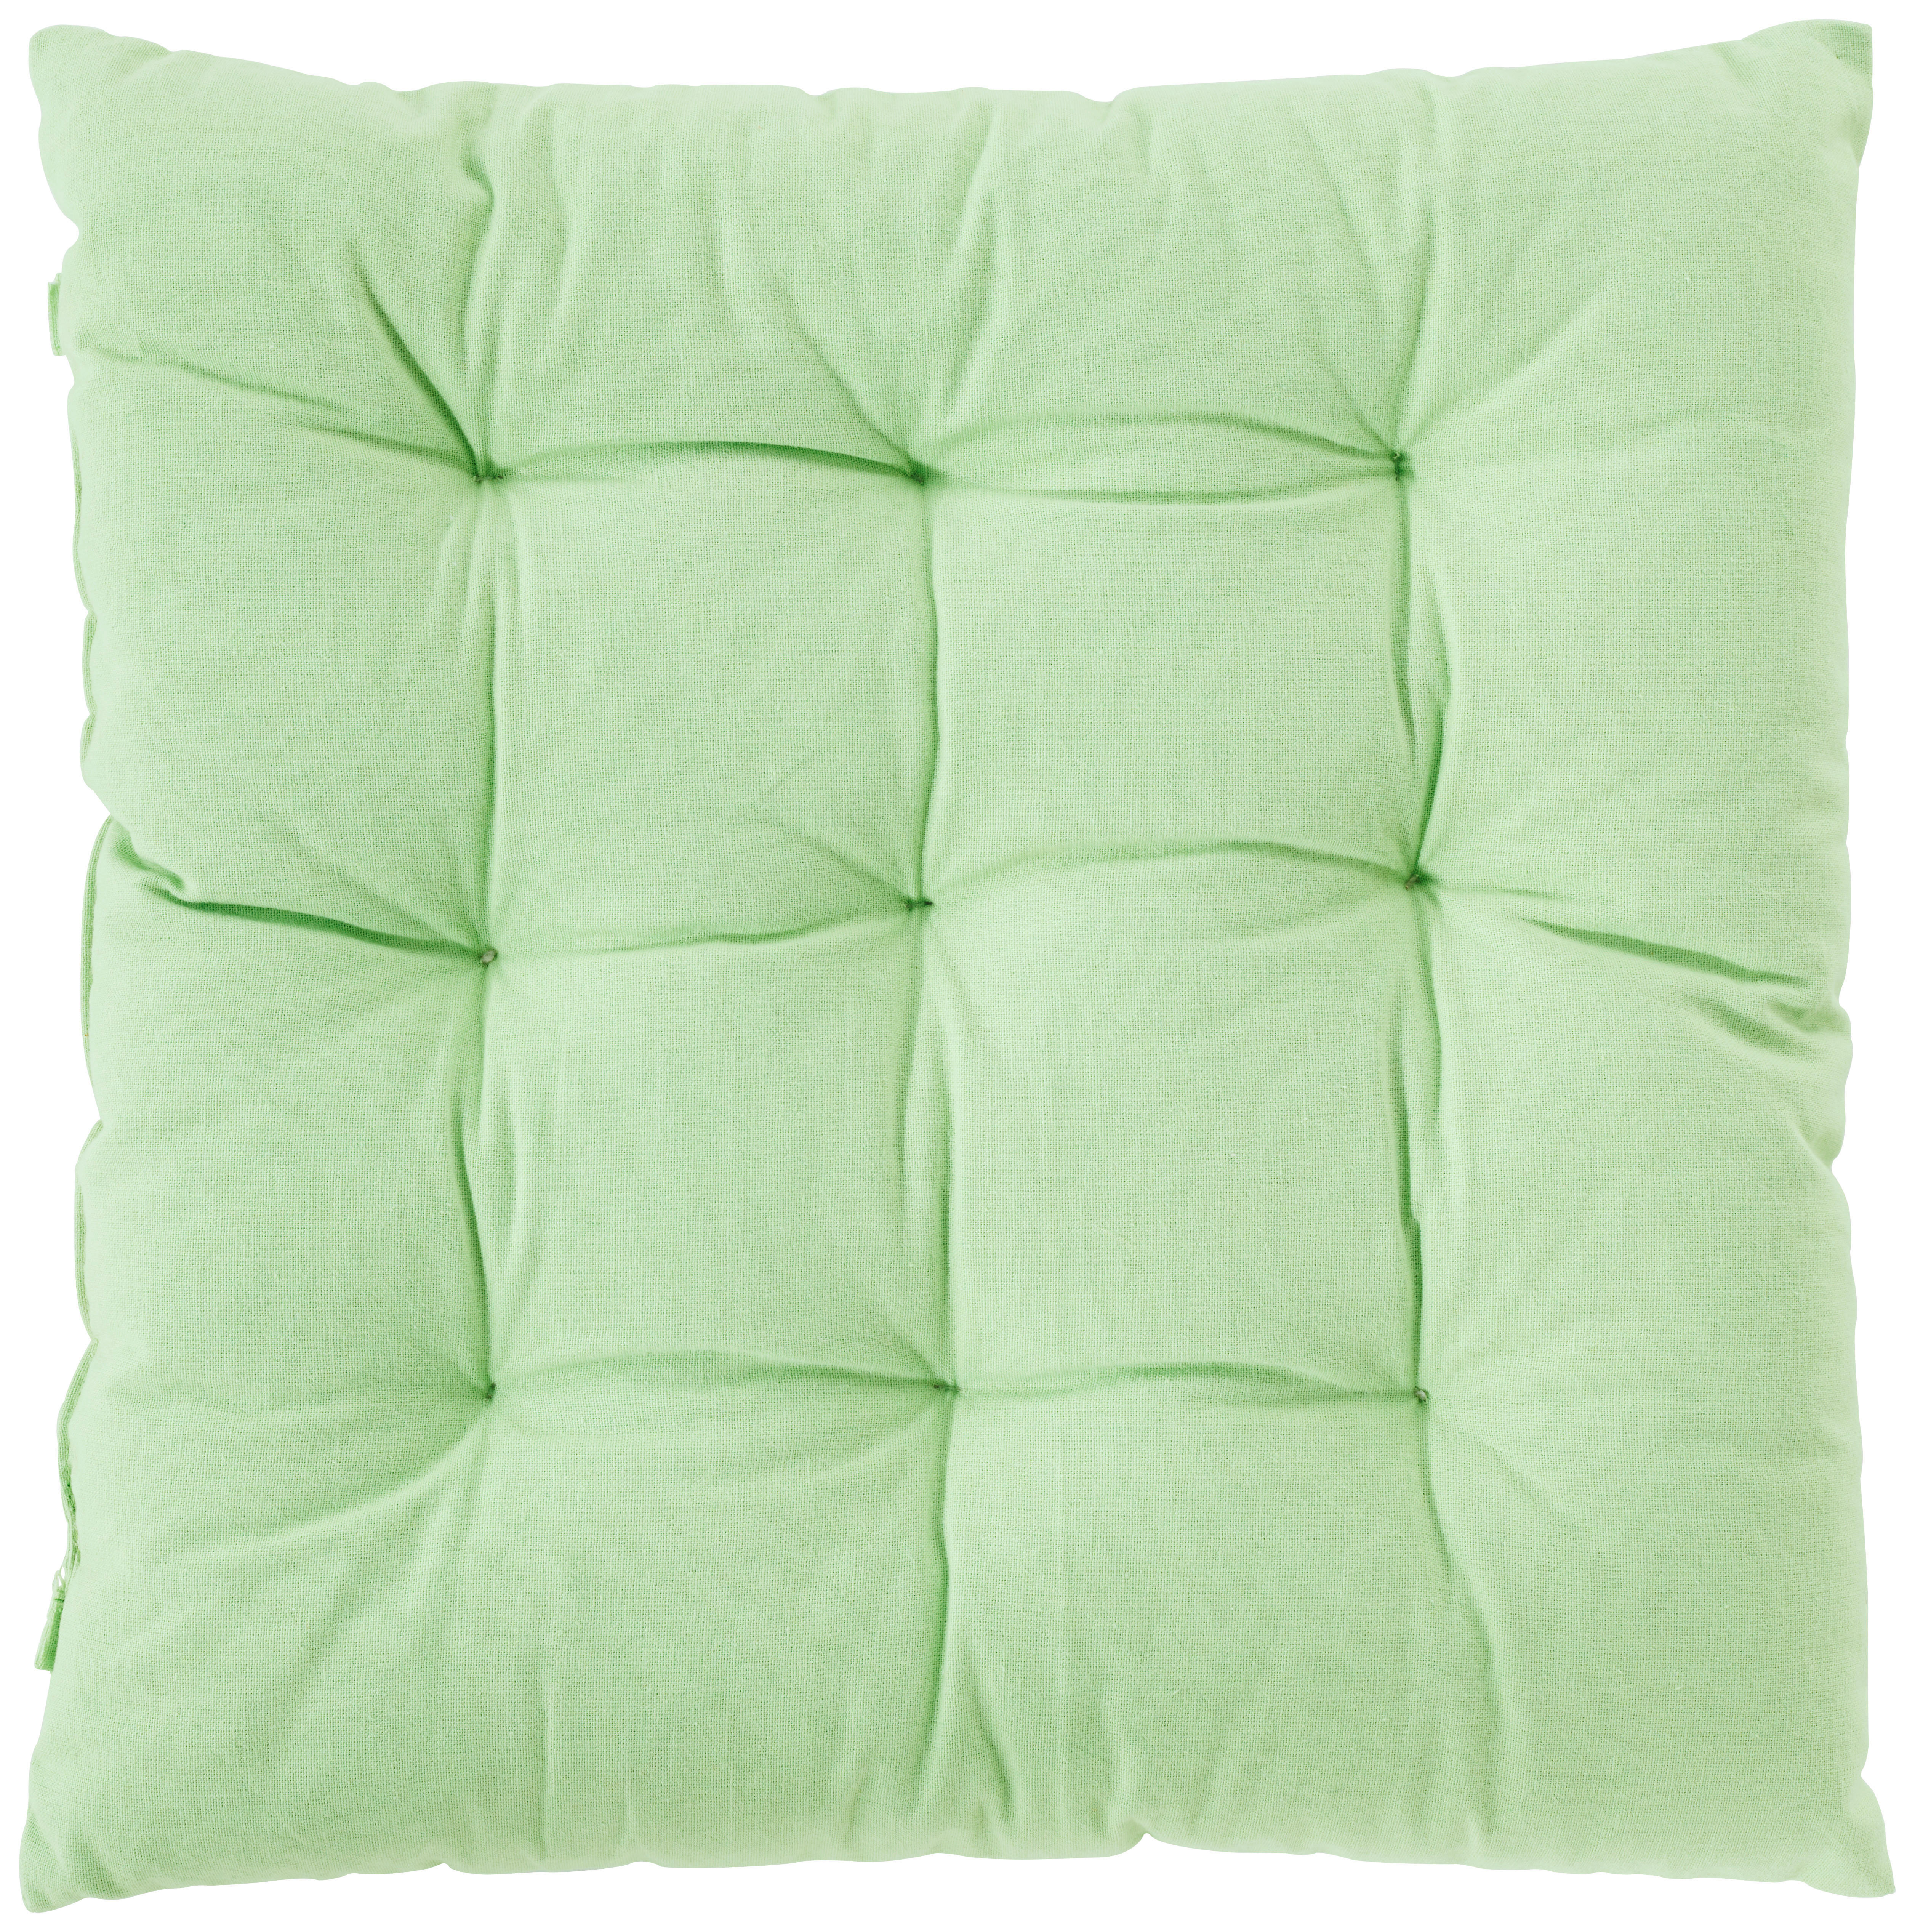 SITTDYNA  40/40 cm   - grön, Basics, textil (40/40cm) - Boxxx